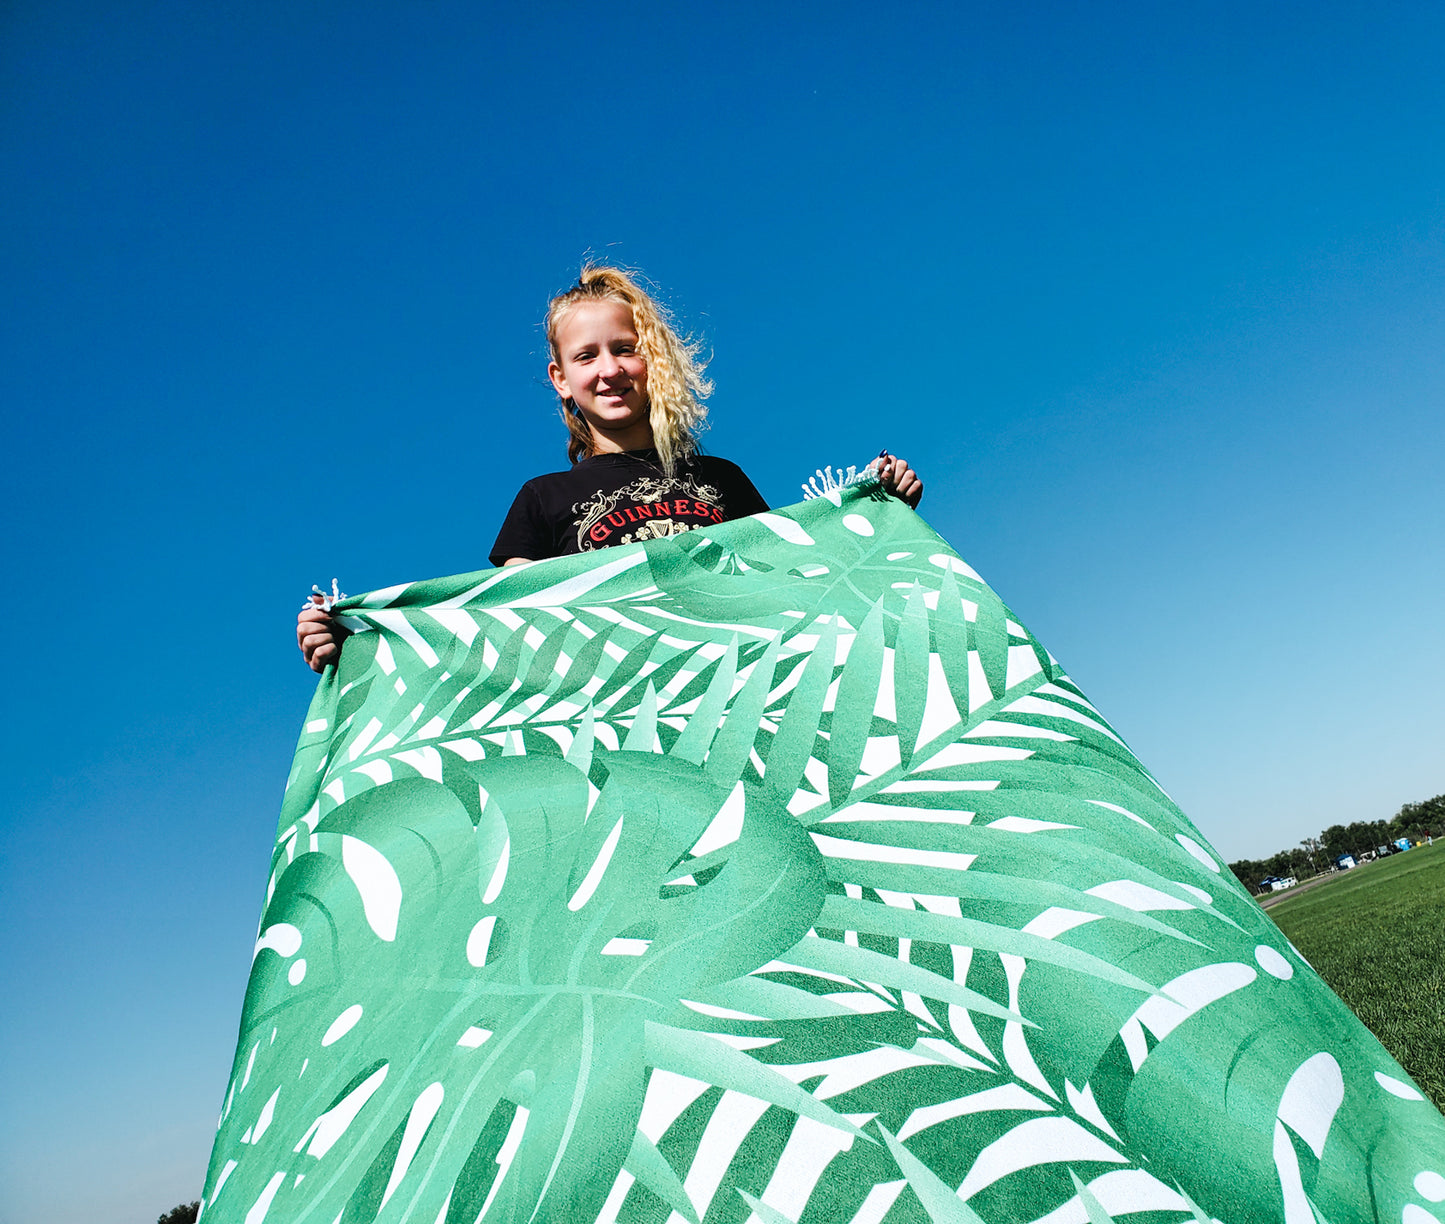 Green Leafed Oversized Round Beautiful Microfiber Boho Beach Towel Blanket